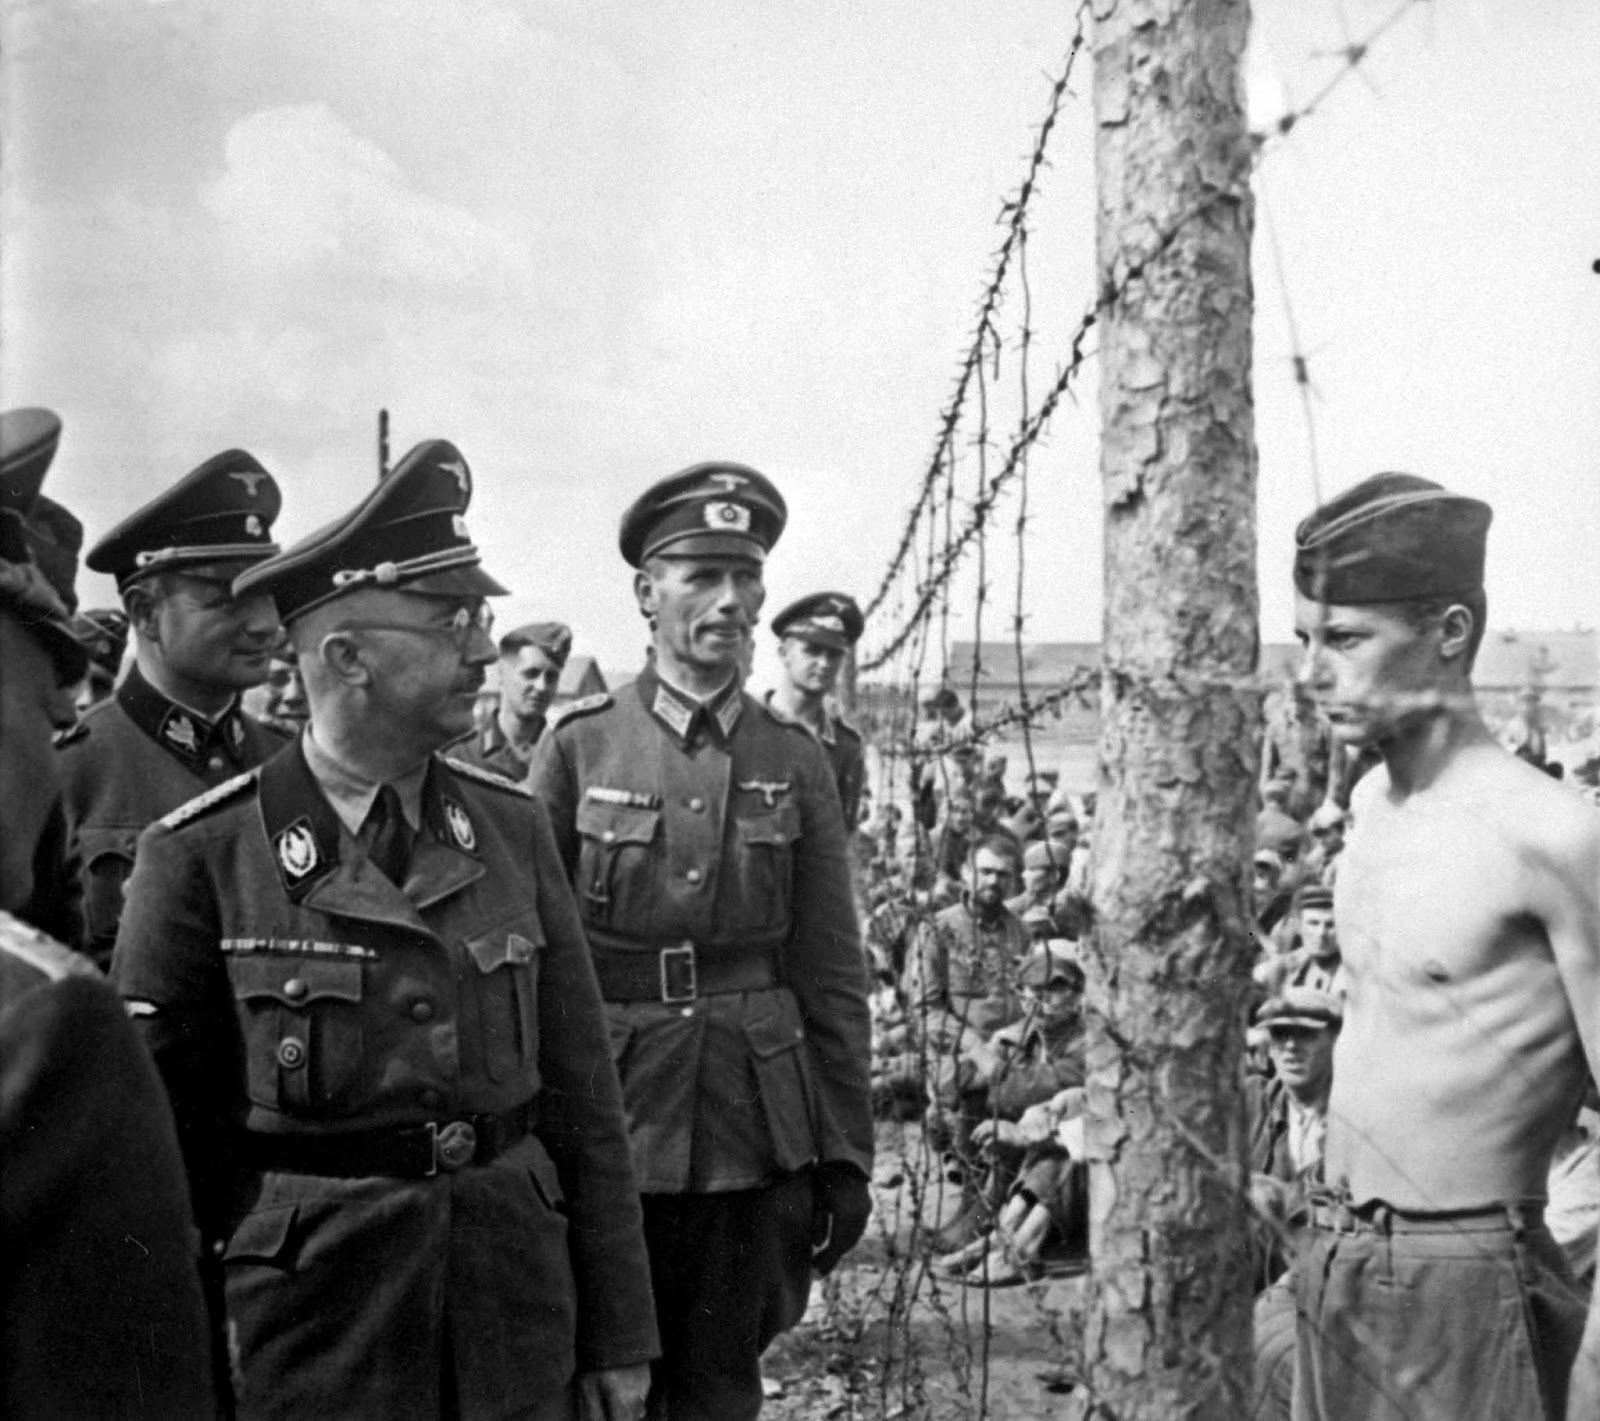 https://rarehistoricalphotos.com/himmler-prisoner-staring-defiance-1941/?fbclid=IwAR3_9IJiVC6kd81ccb3OWdUmL3-ActeawBL0WbNrSDSy7BQP6eRoHSutGQU